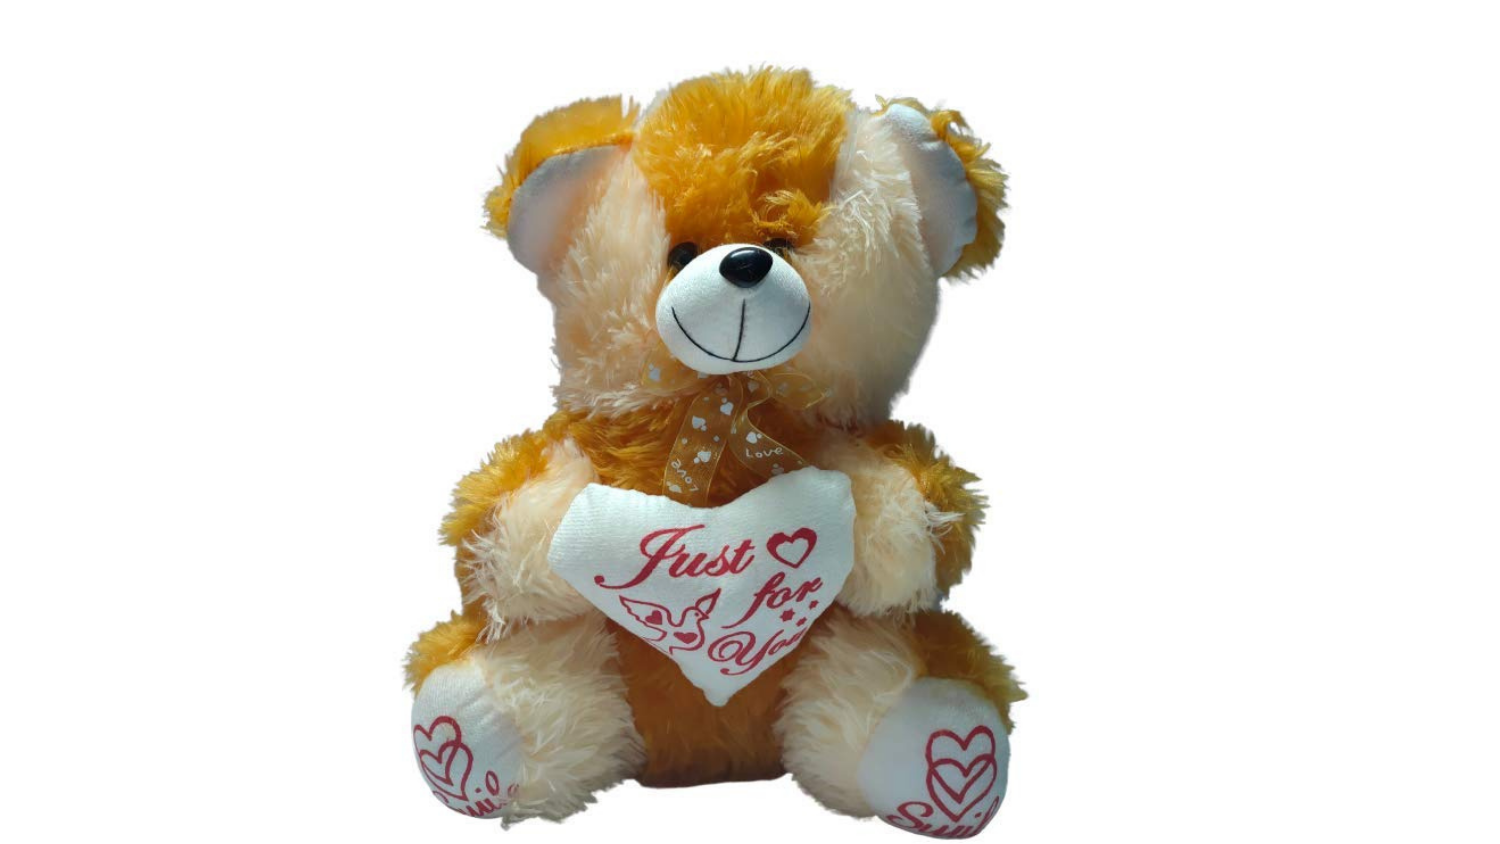 Teddy Bear Stuffed Animal